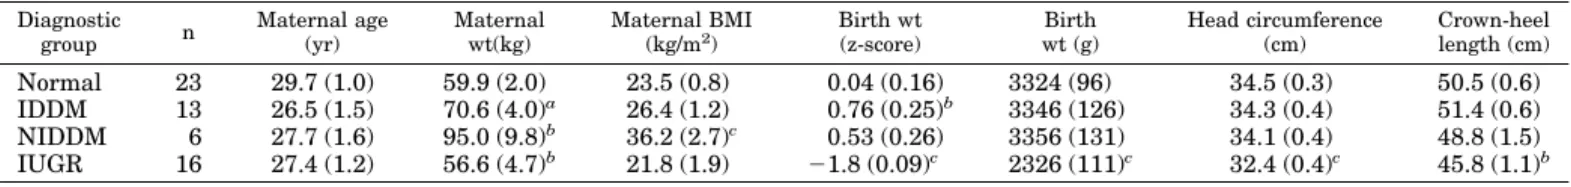 TABLE 1. Maternal and fetal characteristics